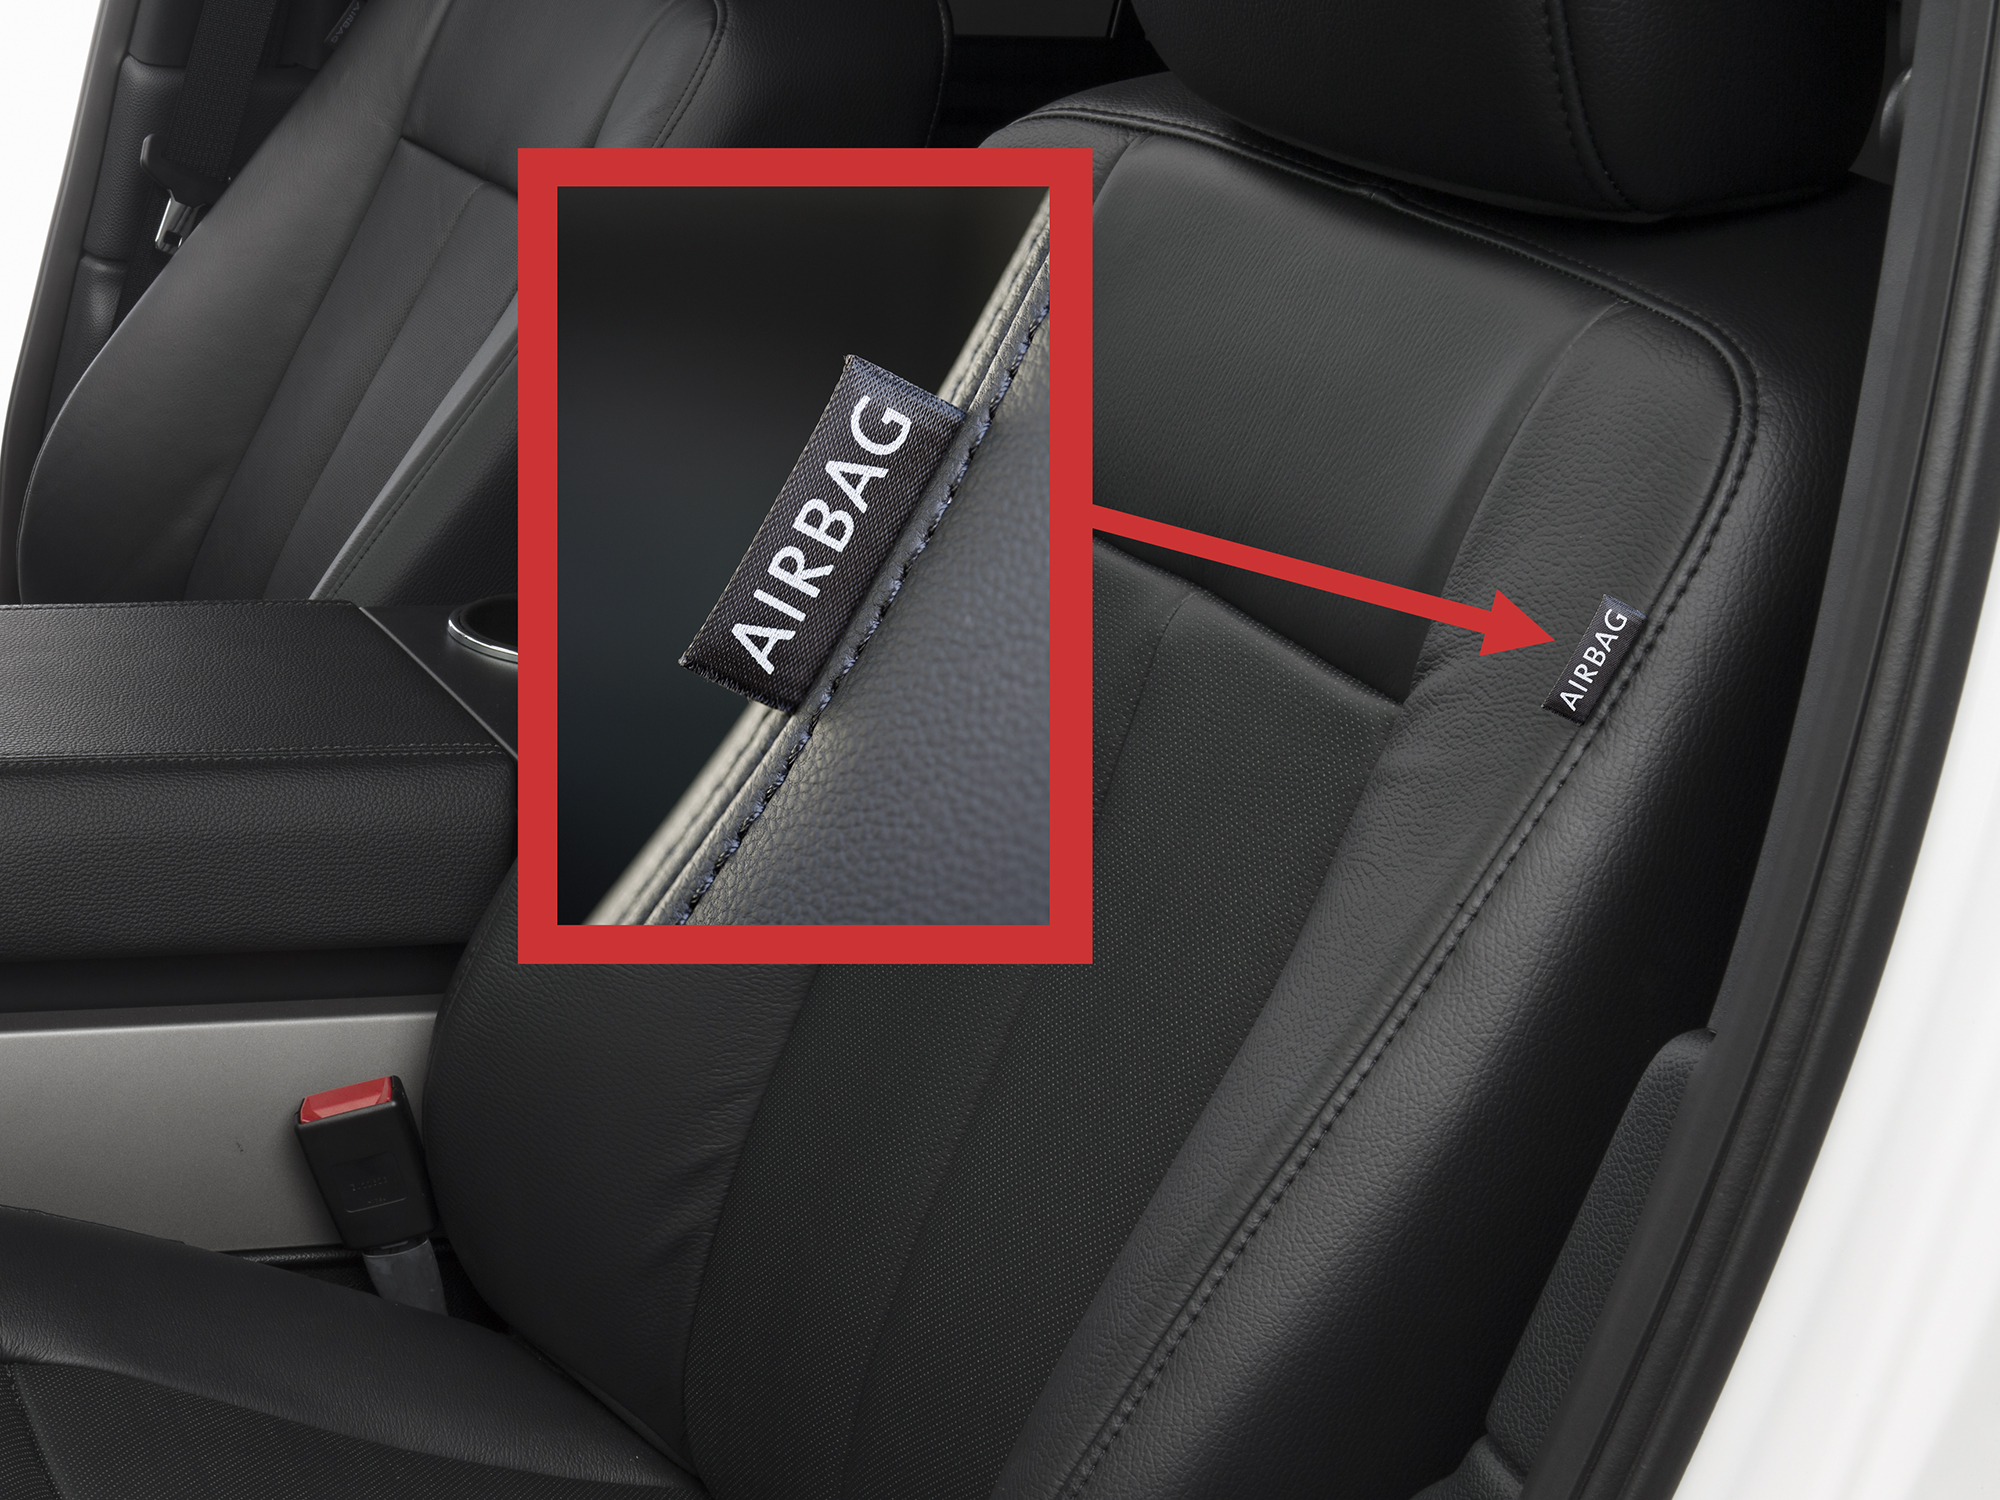 Front Hyundai Seat Covers by Weathertech - Free Shipping | Hyundai Shop